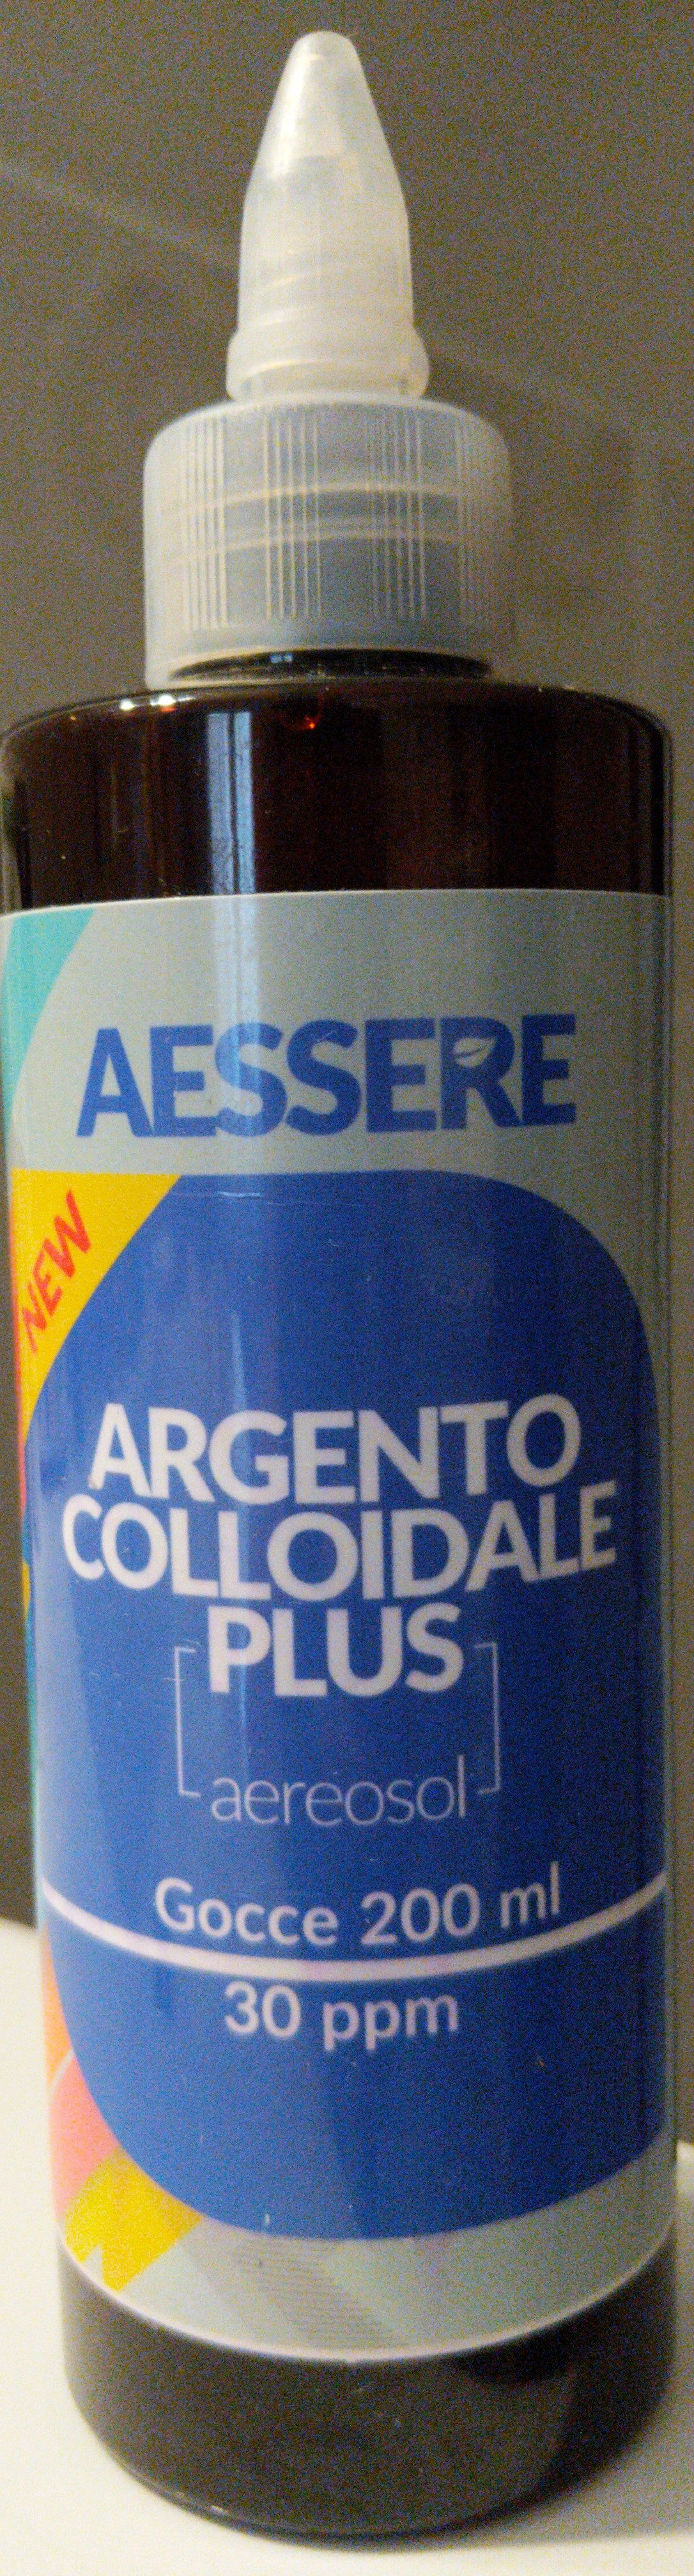 Argento Colloidale Plus aerosol - Tuote - it